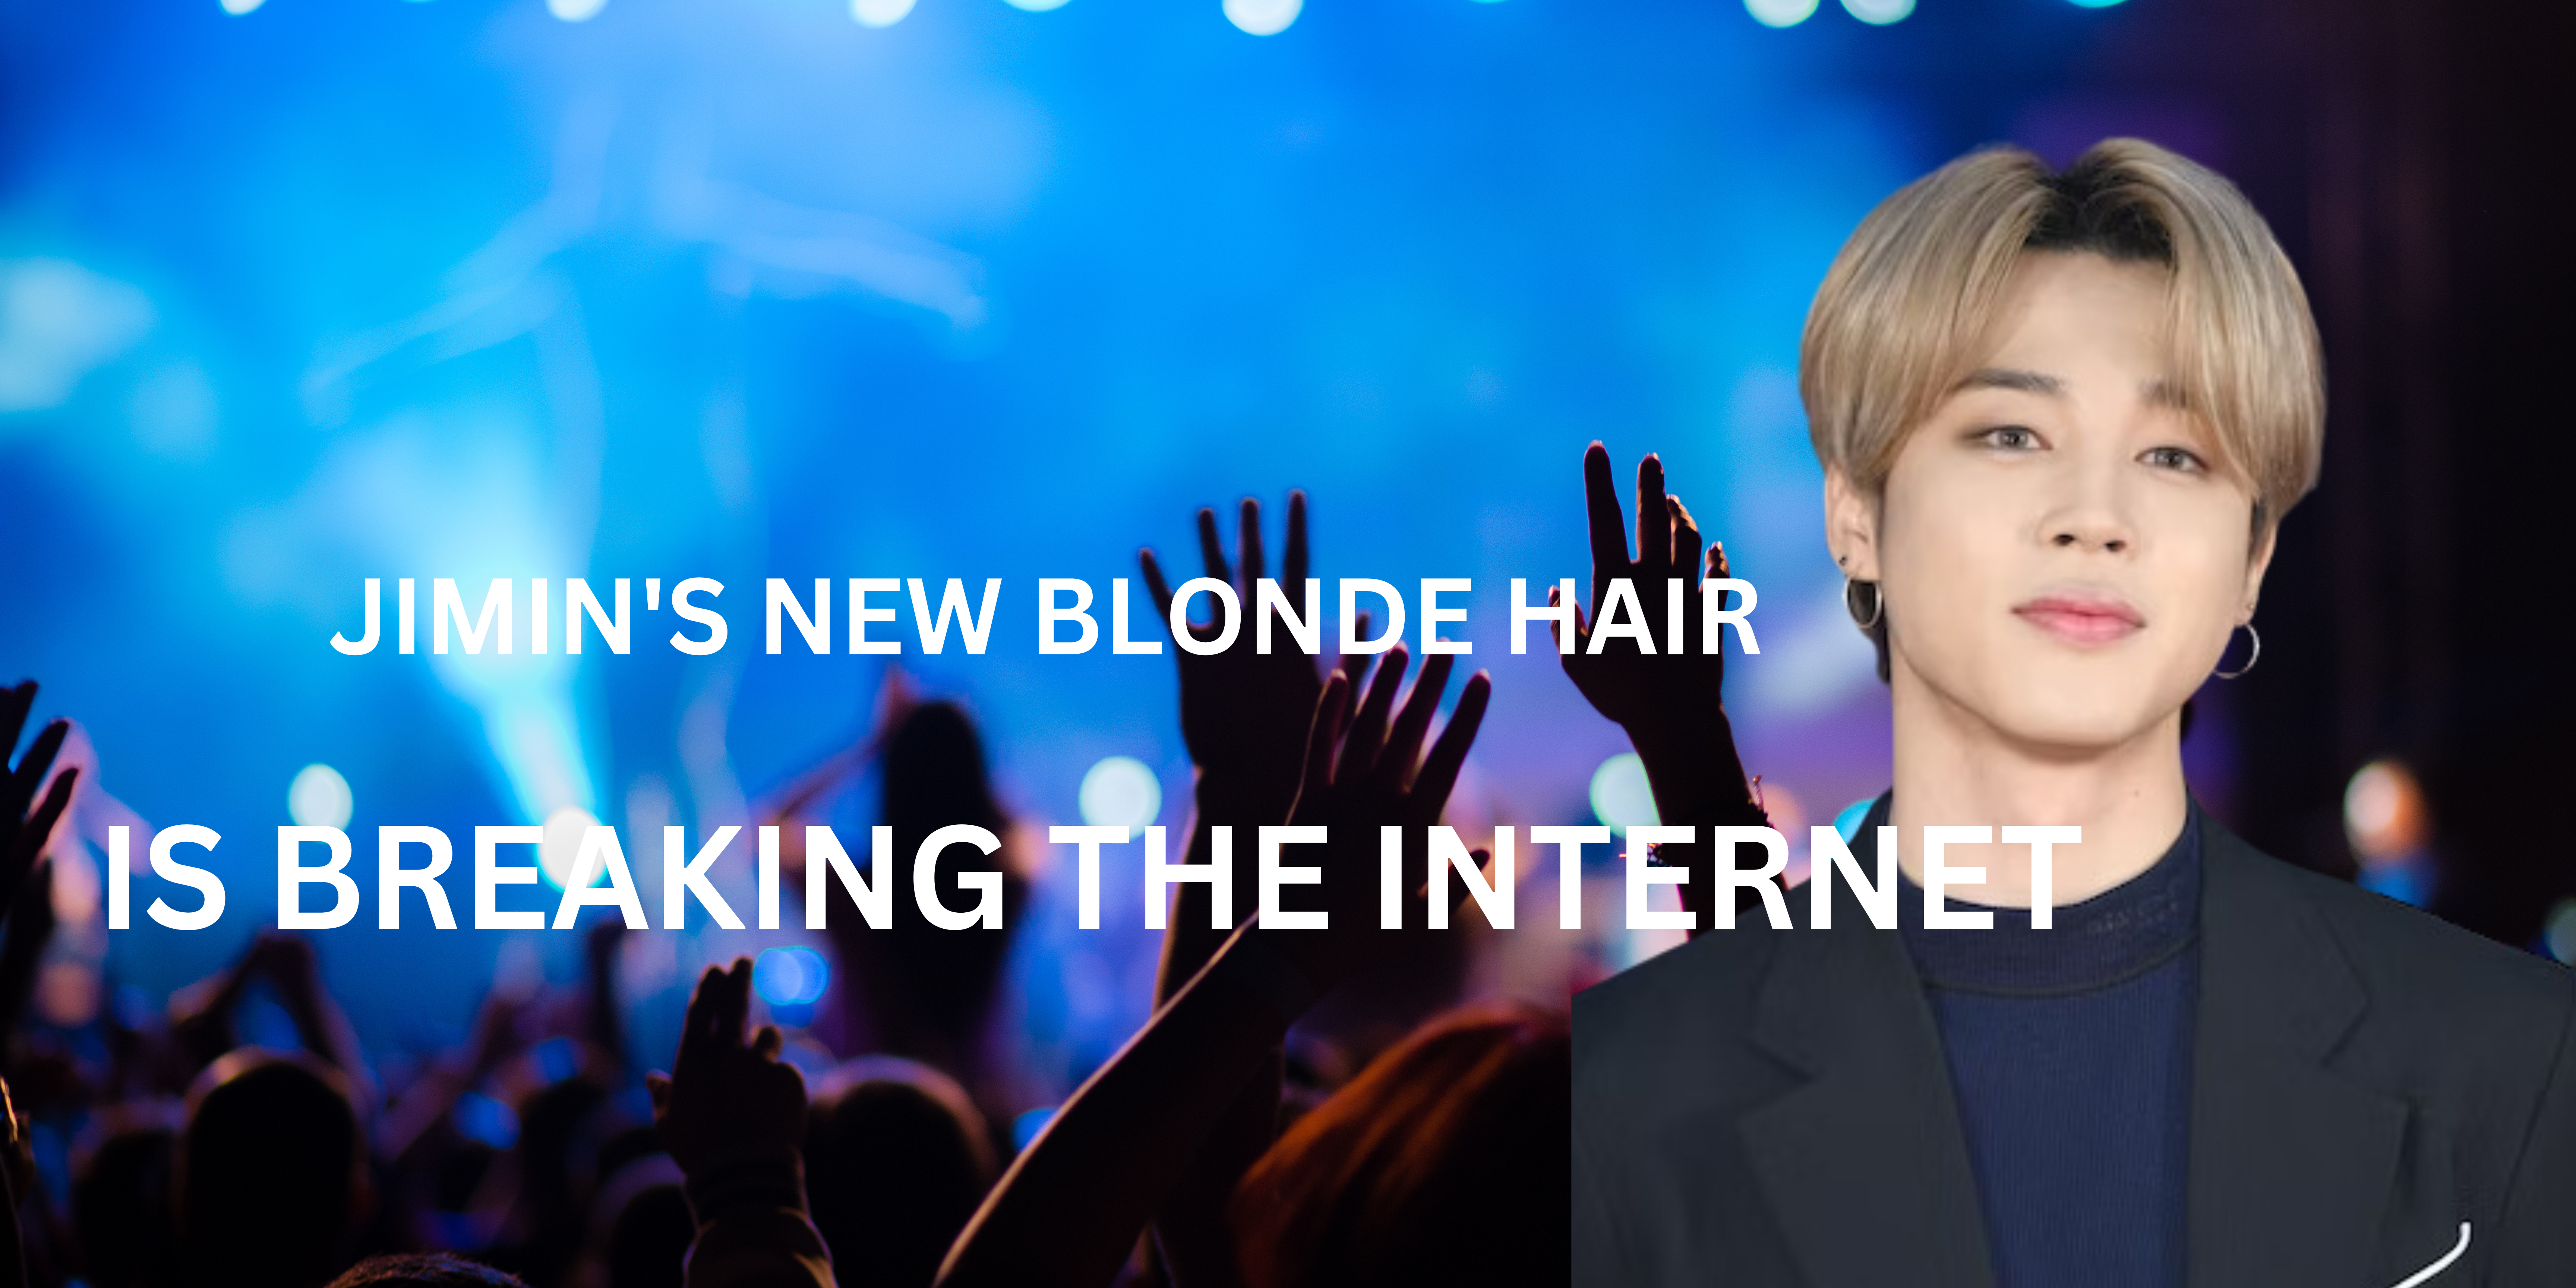 Jimin’s new blonde hair is breaking the internet